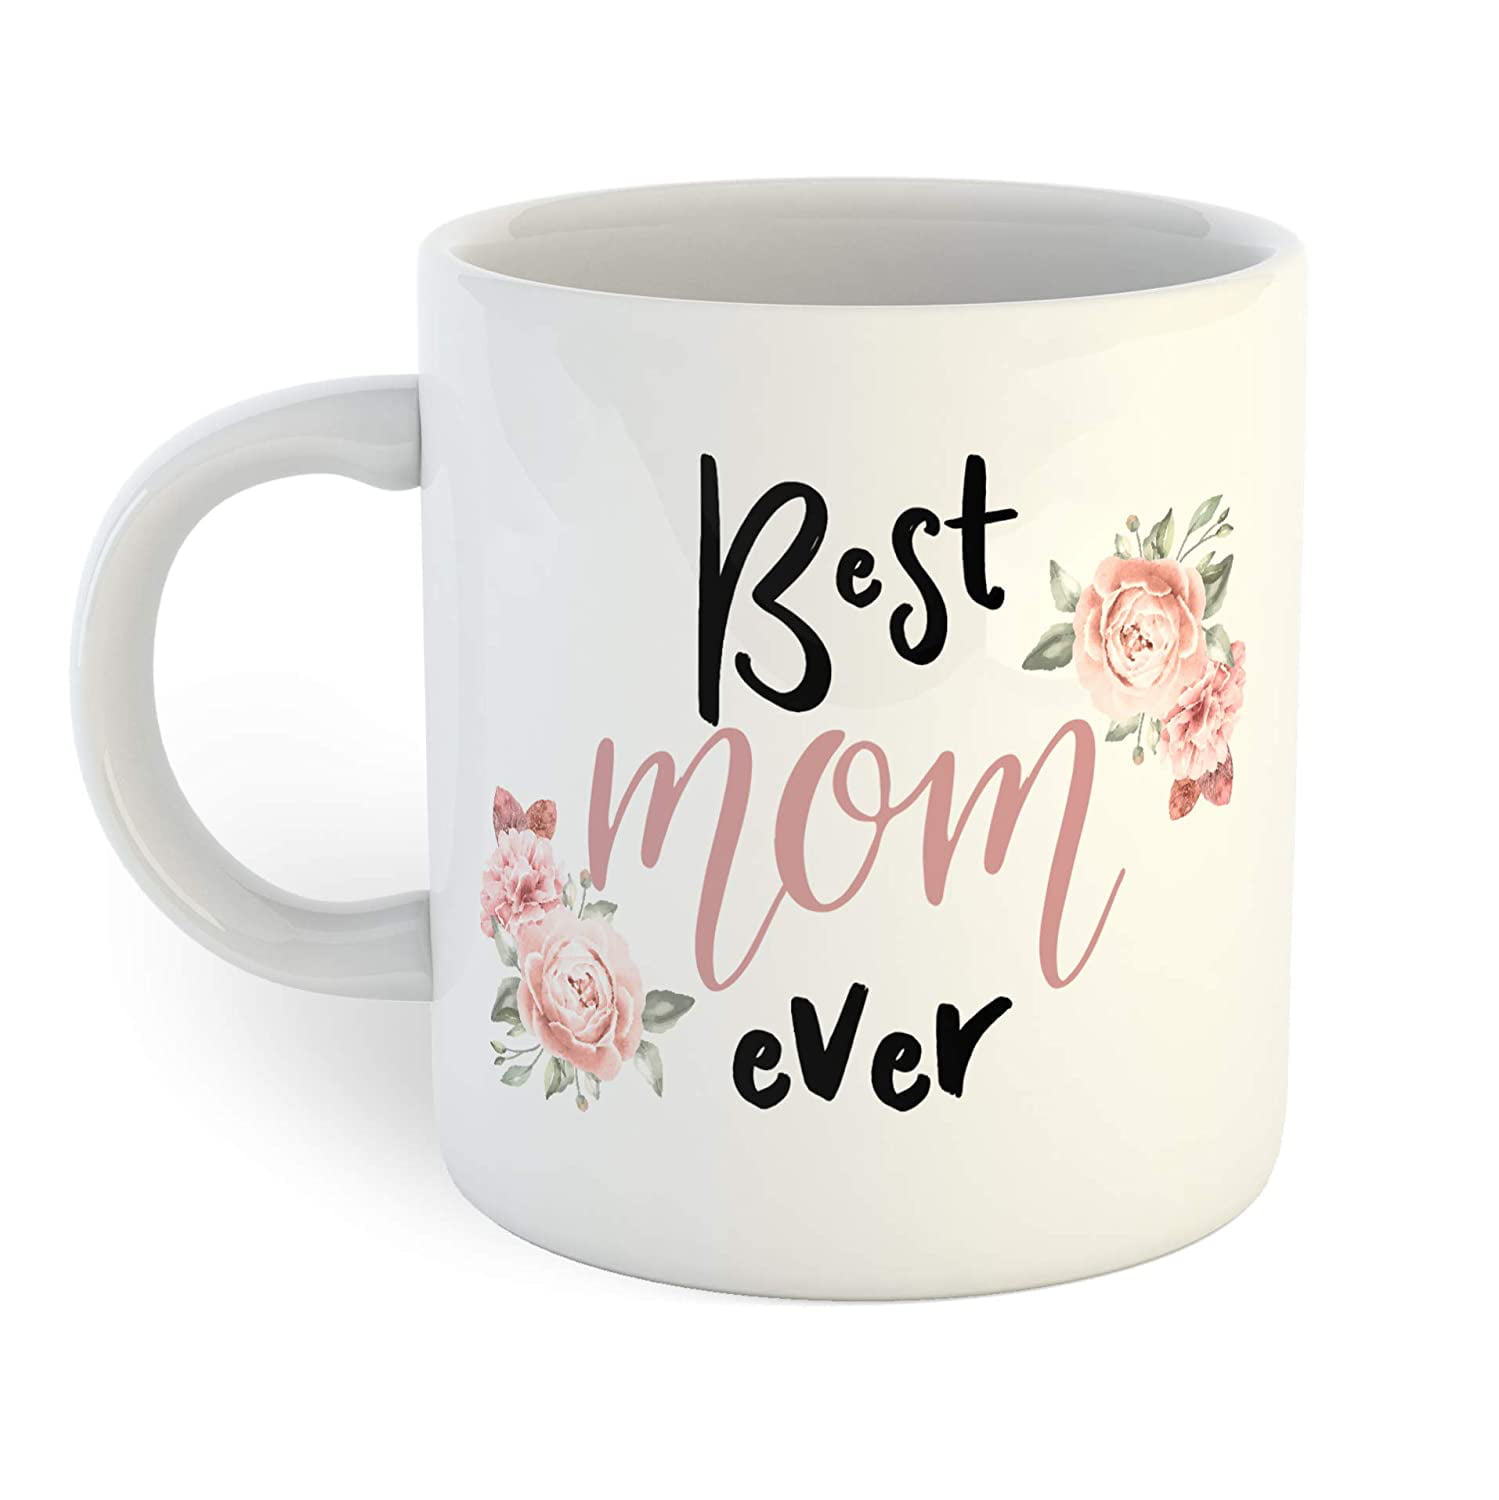 world's best mom mug walmart